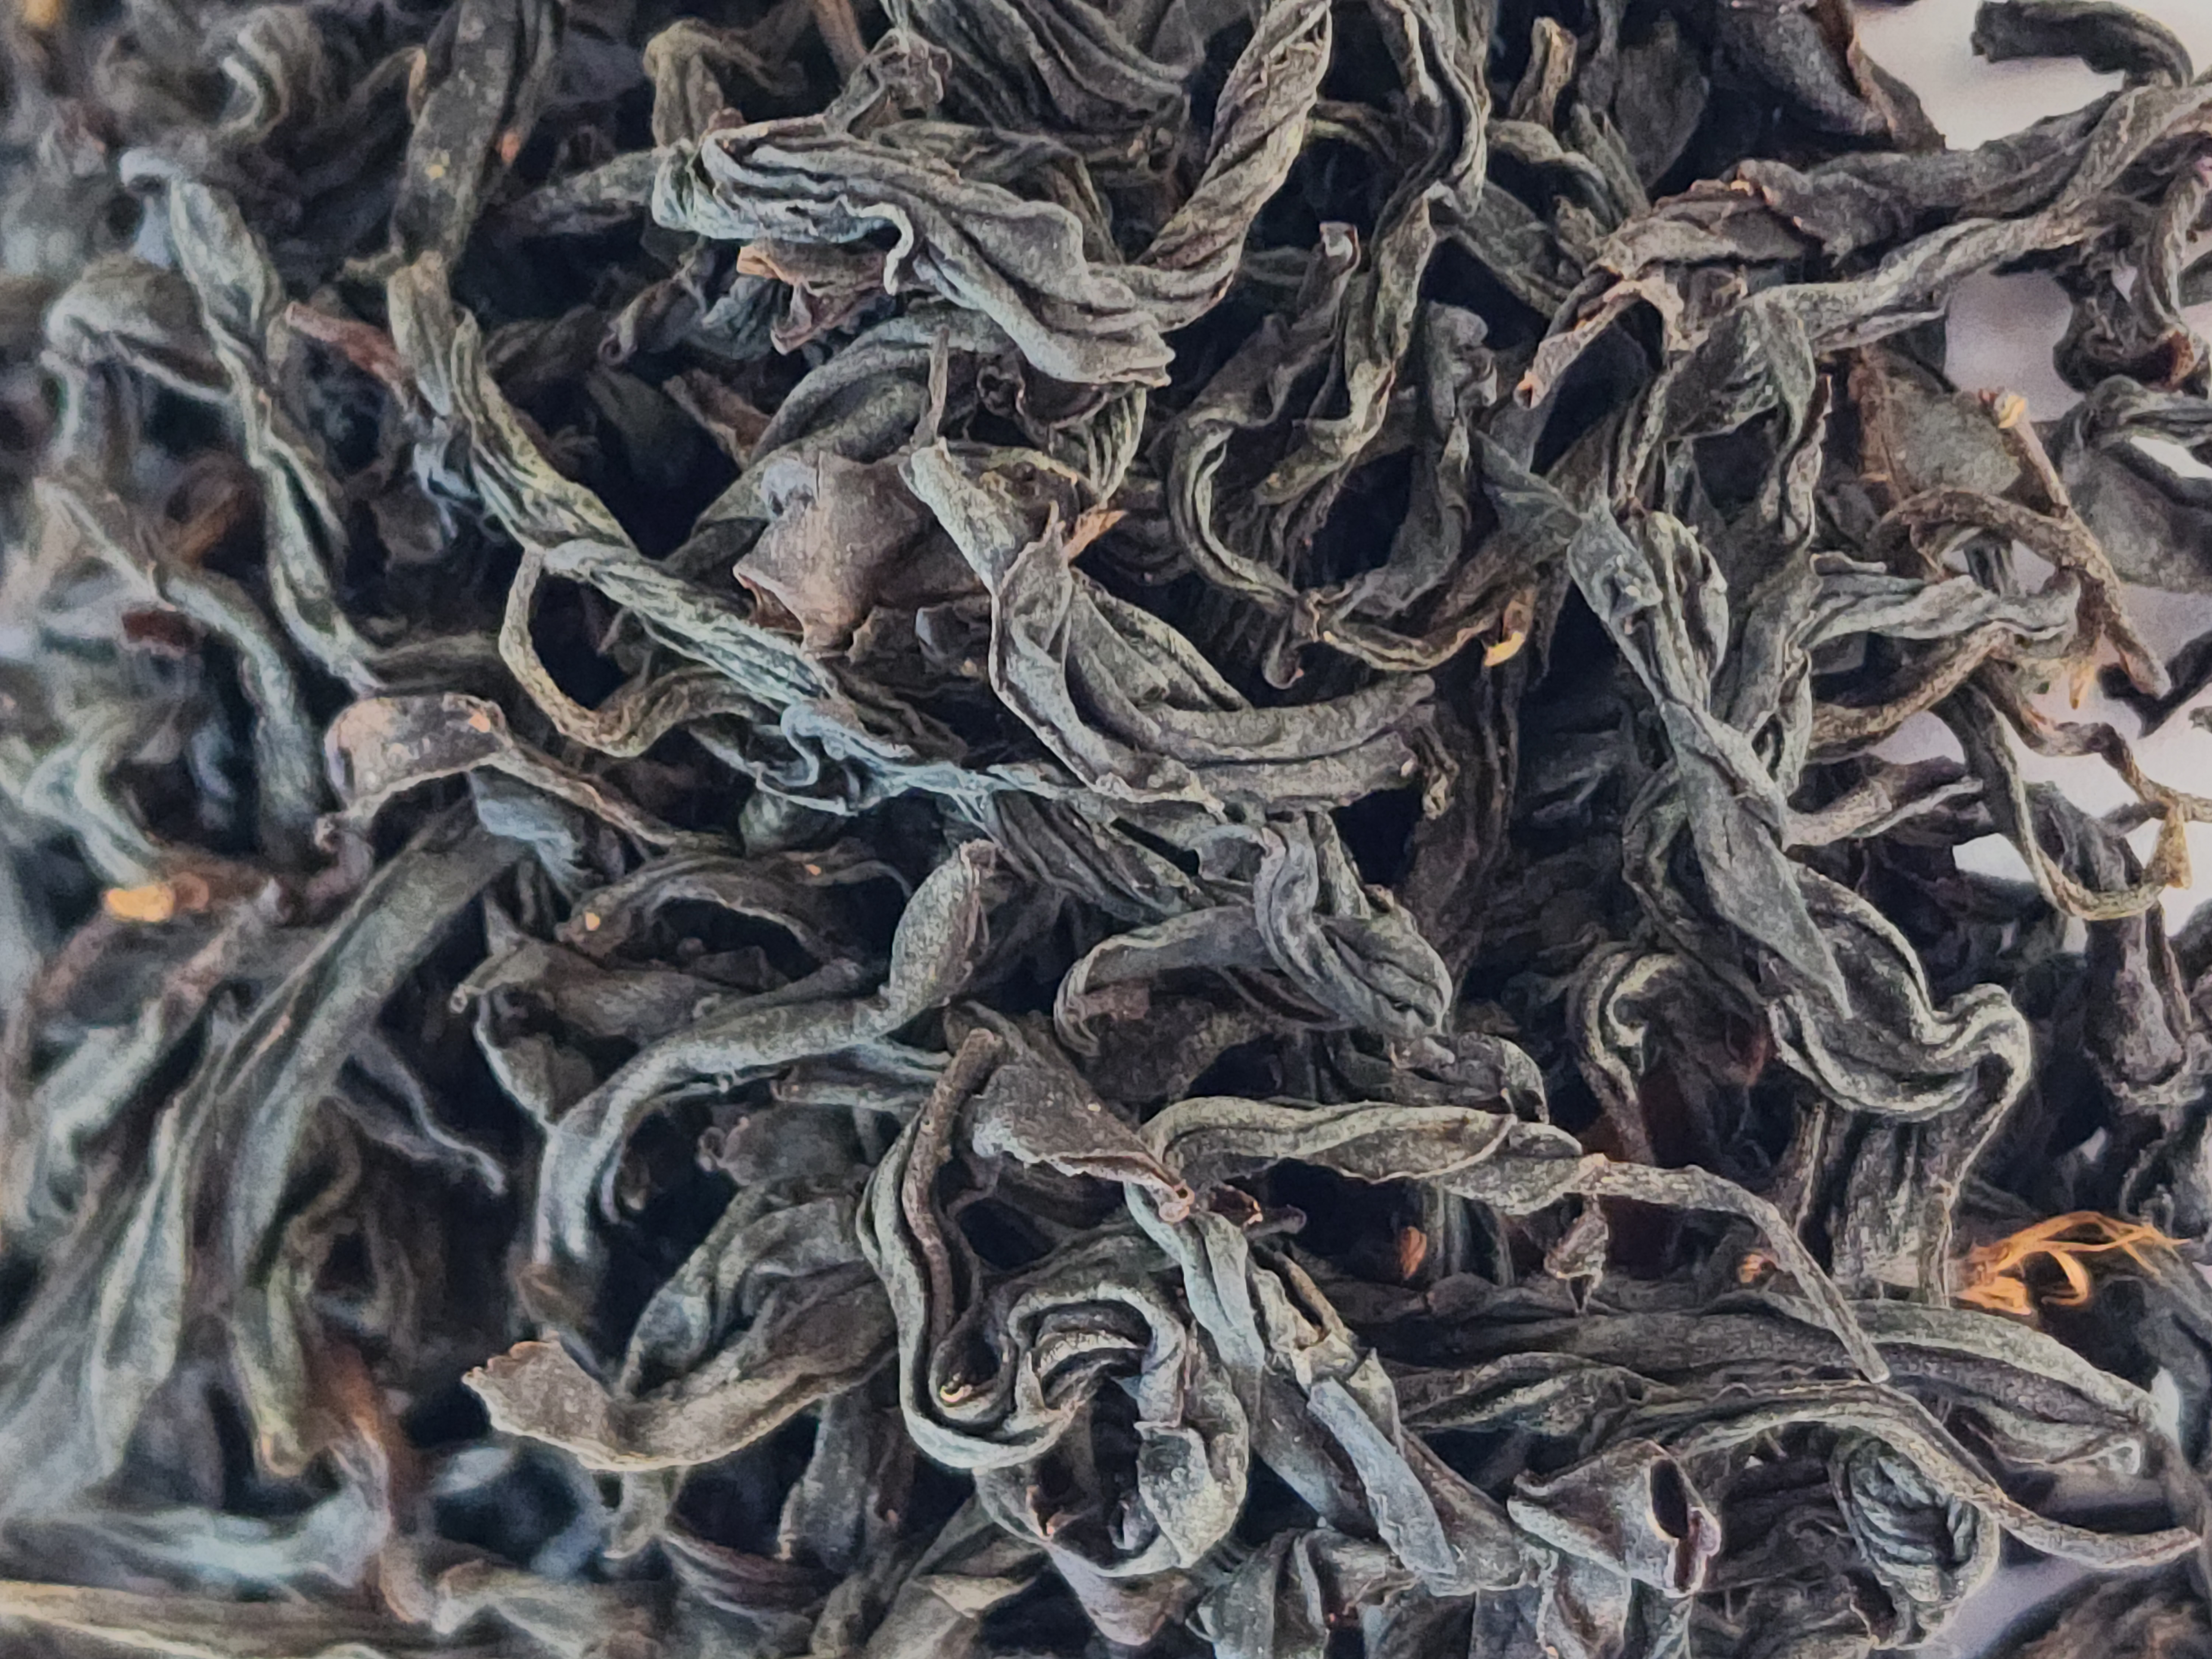 Fujian Wild Black Tea